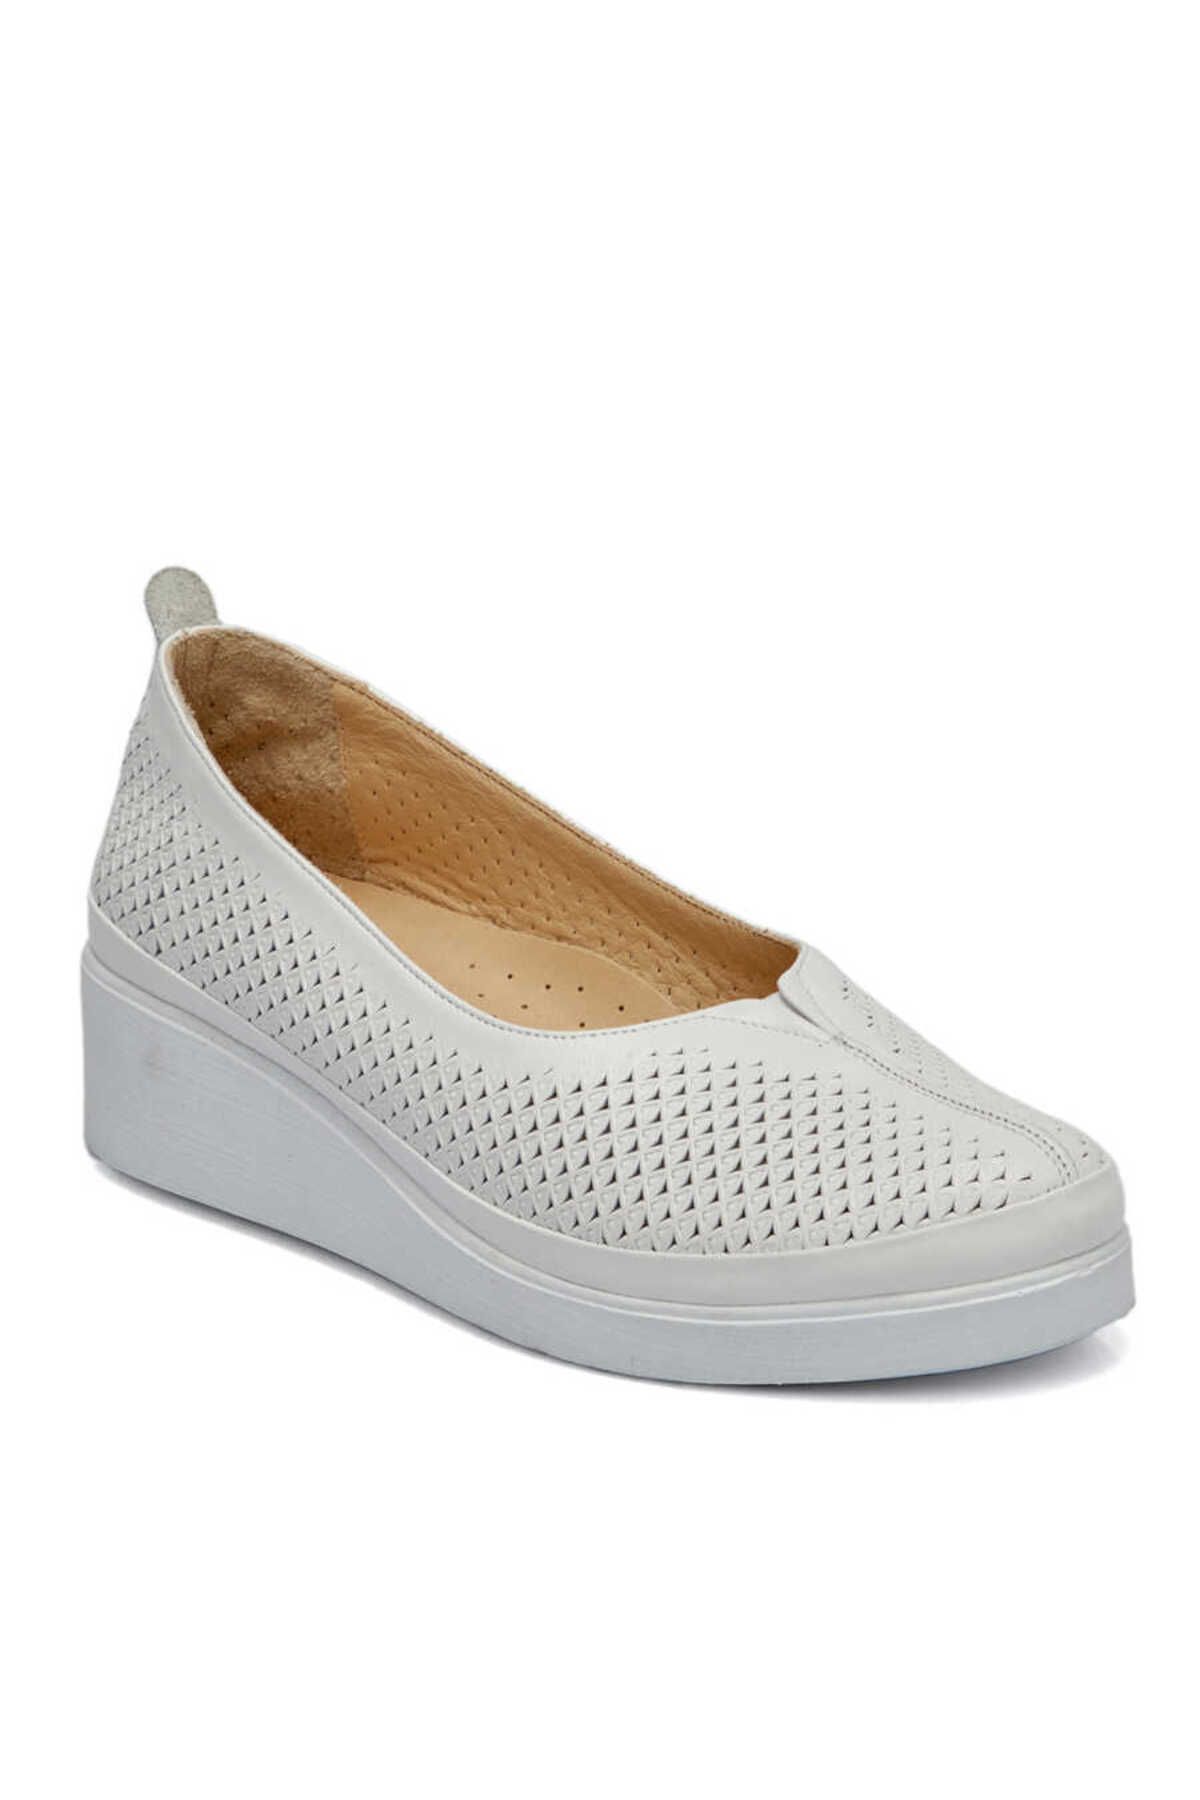 Tergan Beyaz Deri Kadın Dolgu Topuklu Ayakkabı - K23I1AY66639-A26